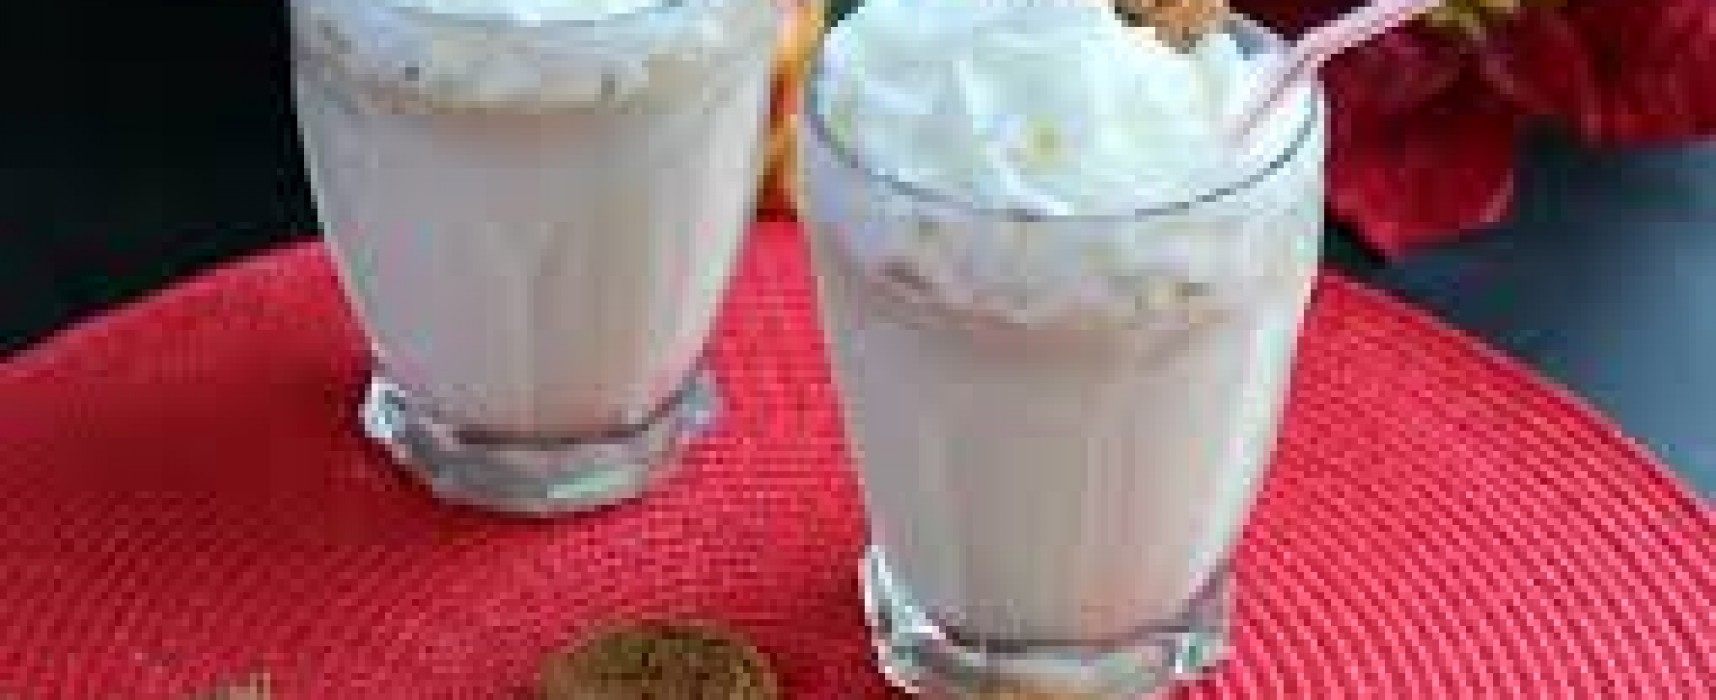 Milkshakes! 5 interesting recipes to follow!